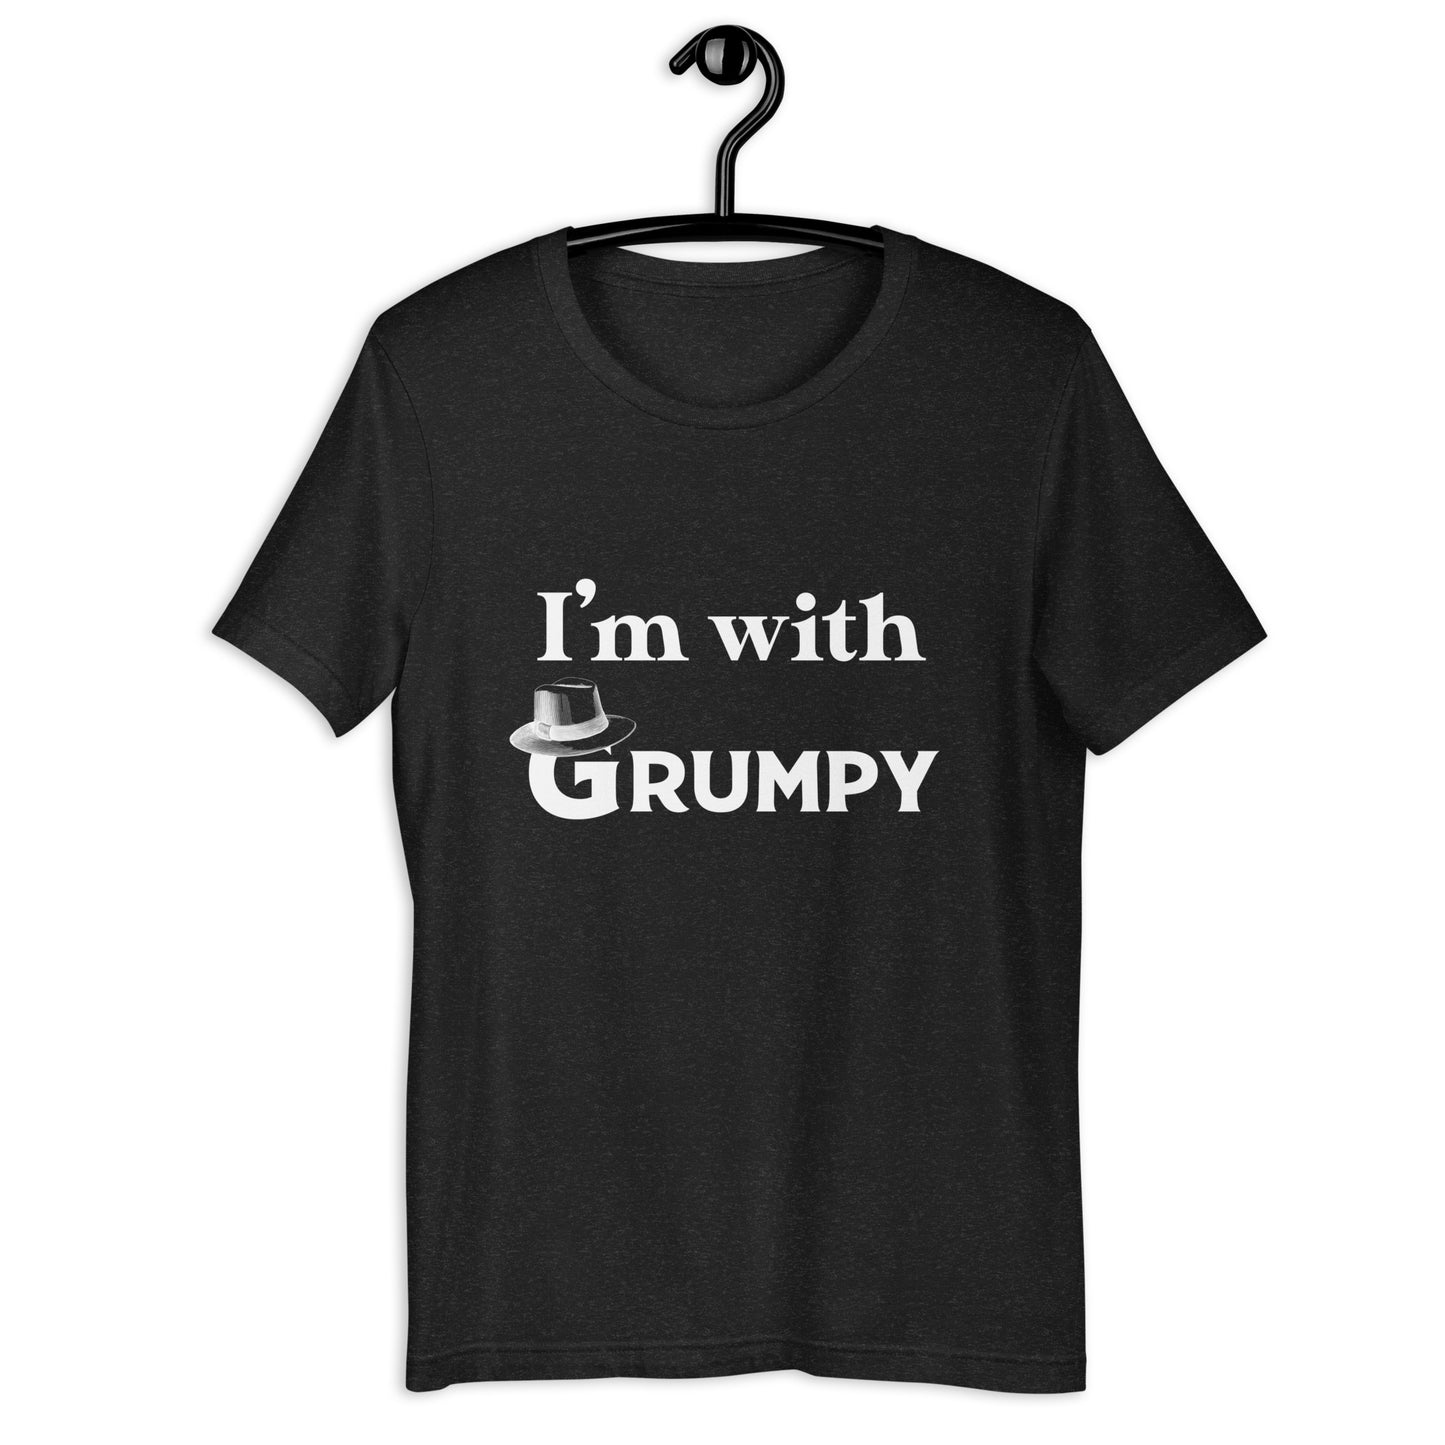 I'm With Grumpy T-Shirt